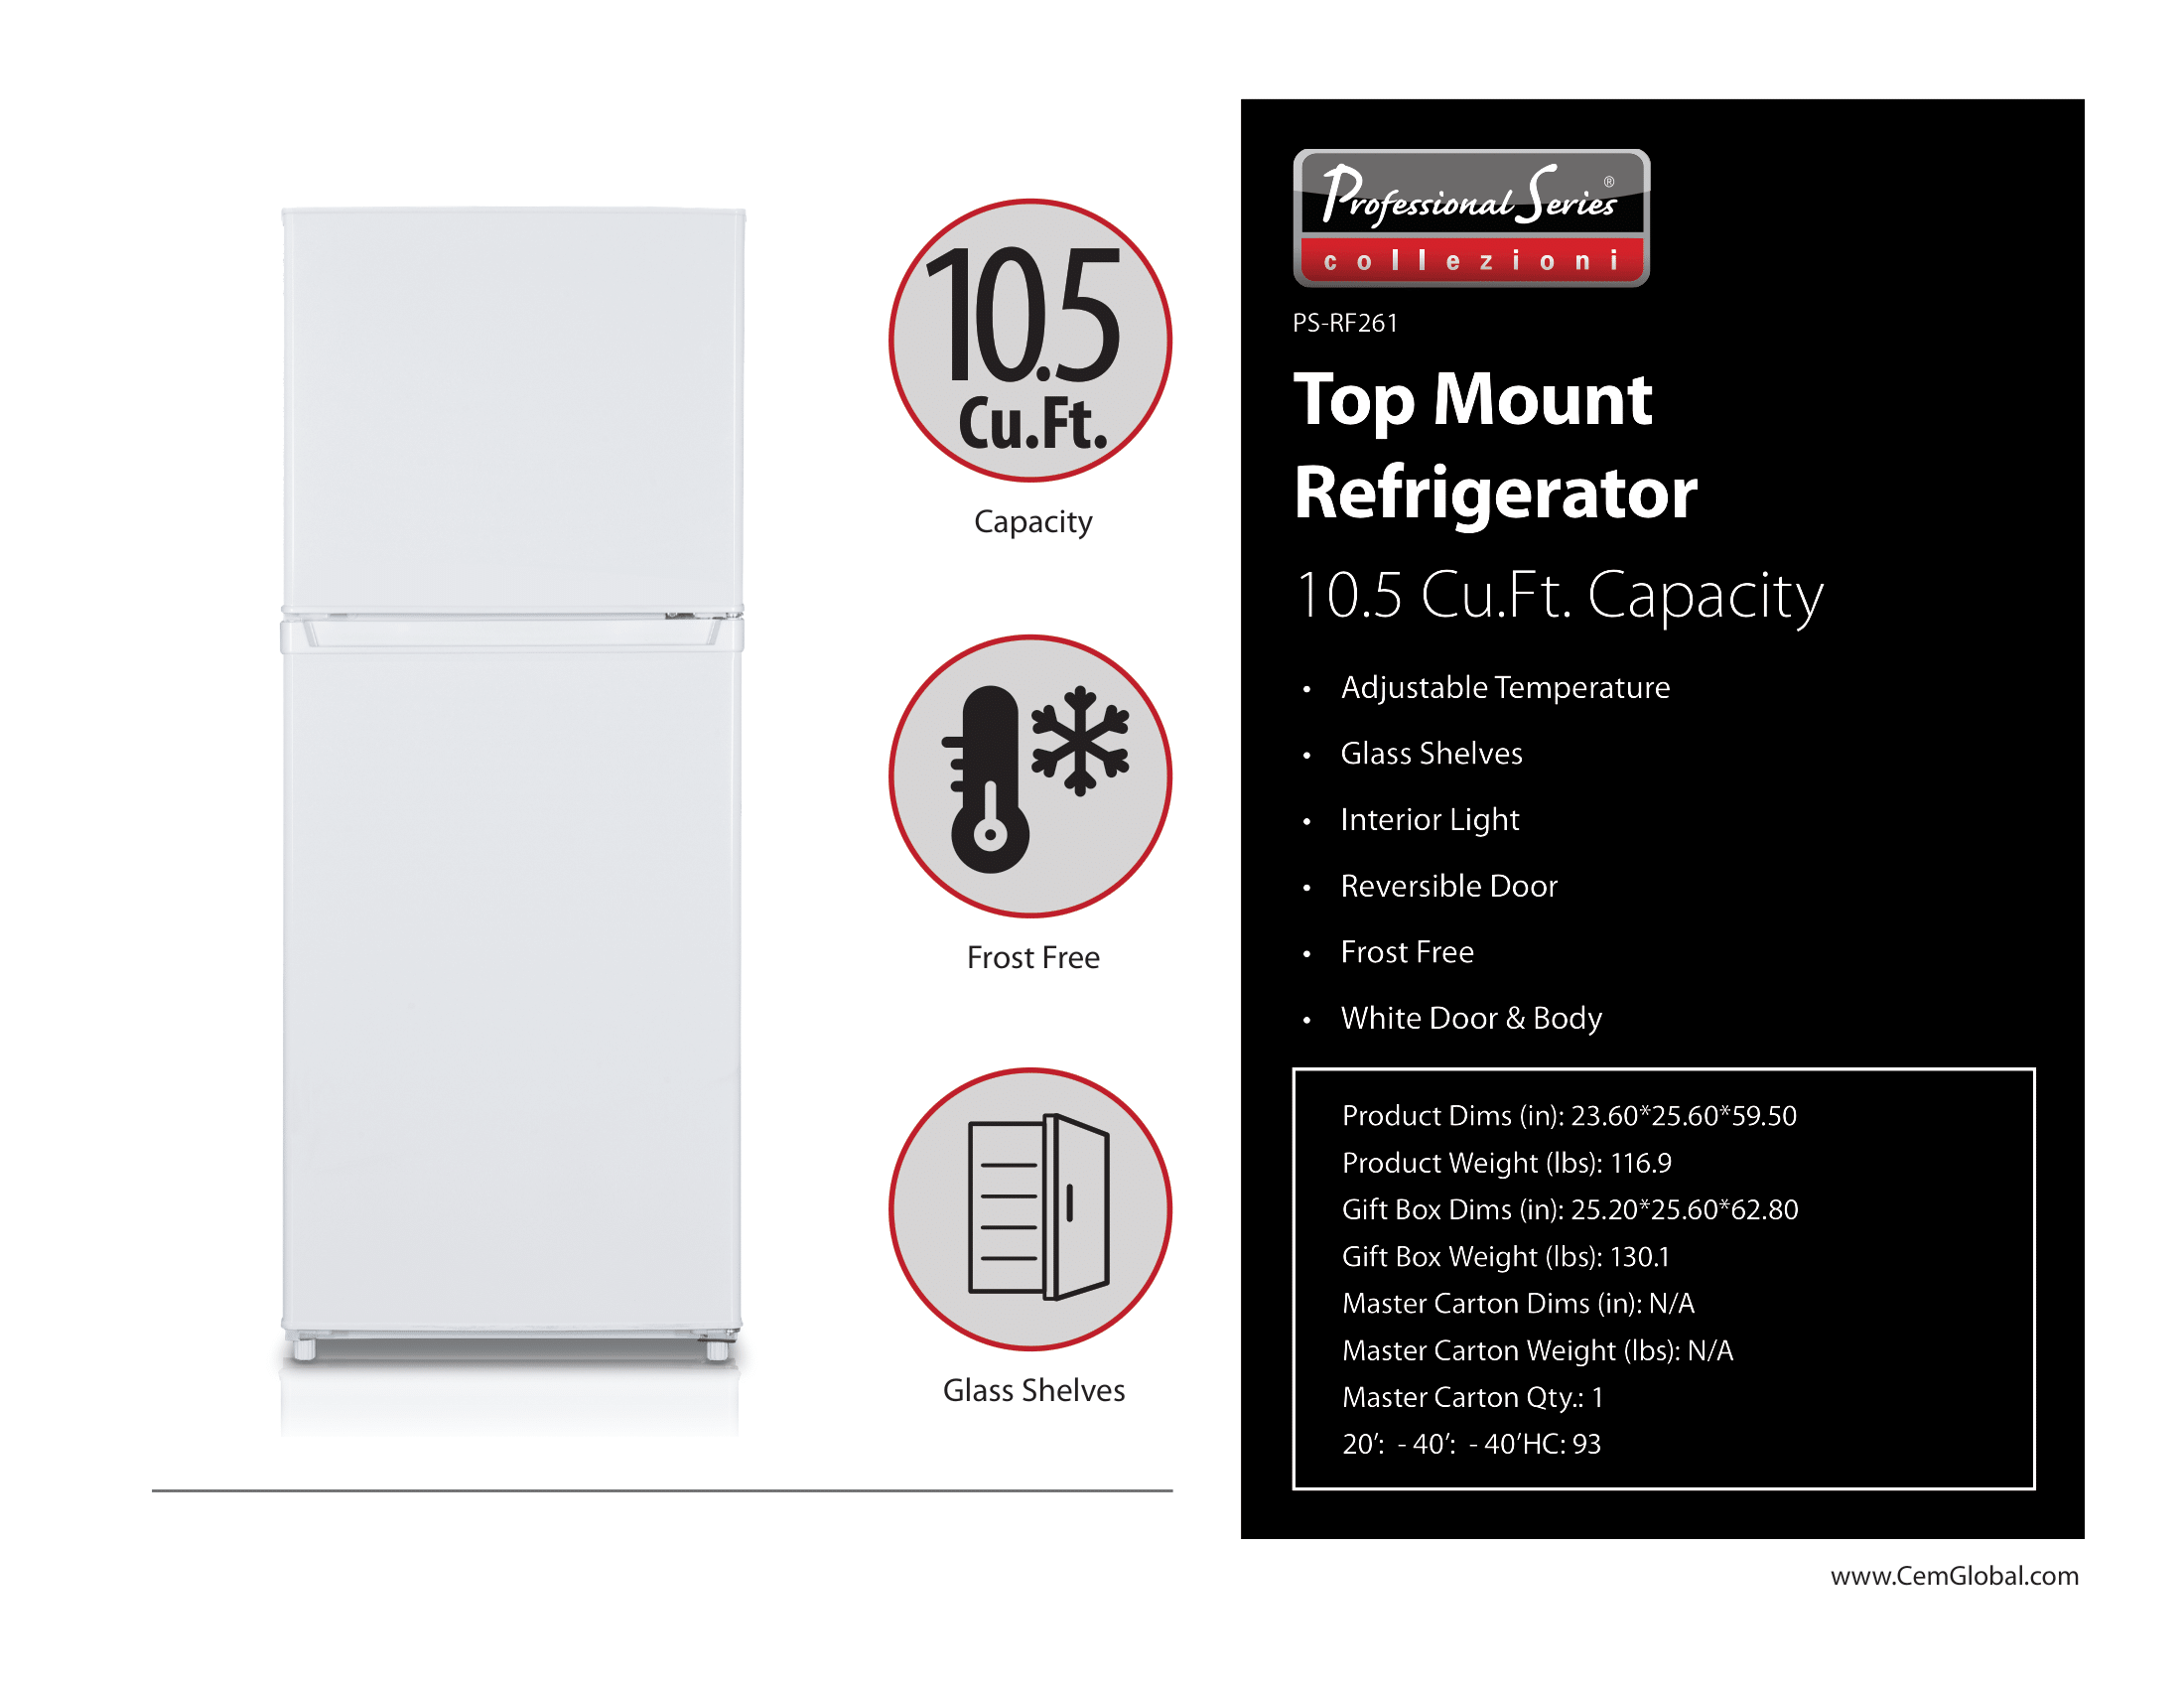 Top Mount Refrigerator 10.5 Cu.Ft.